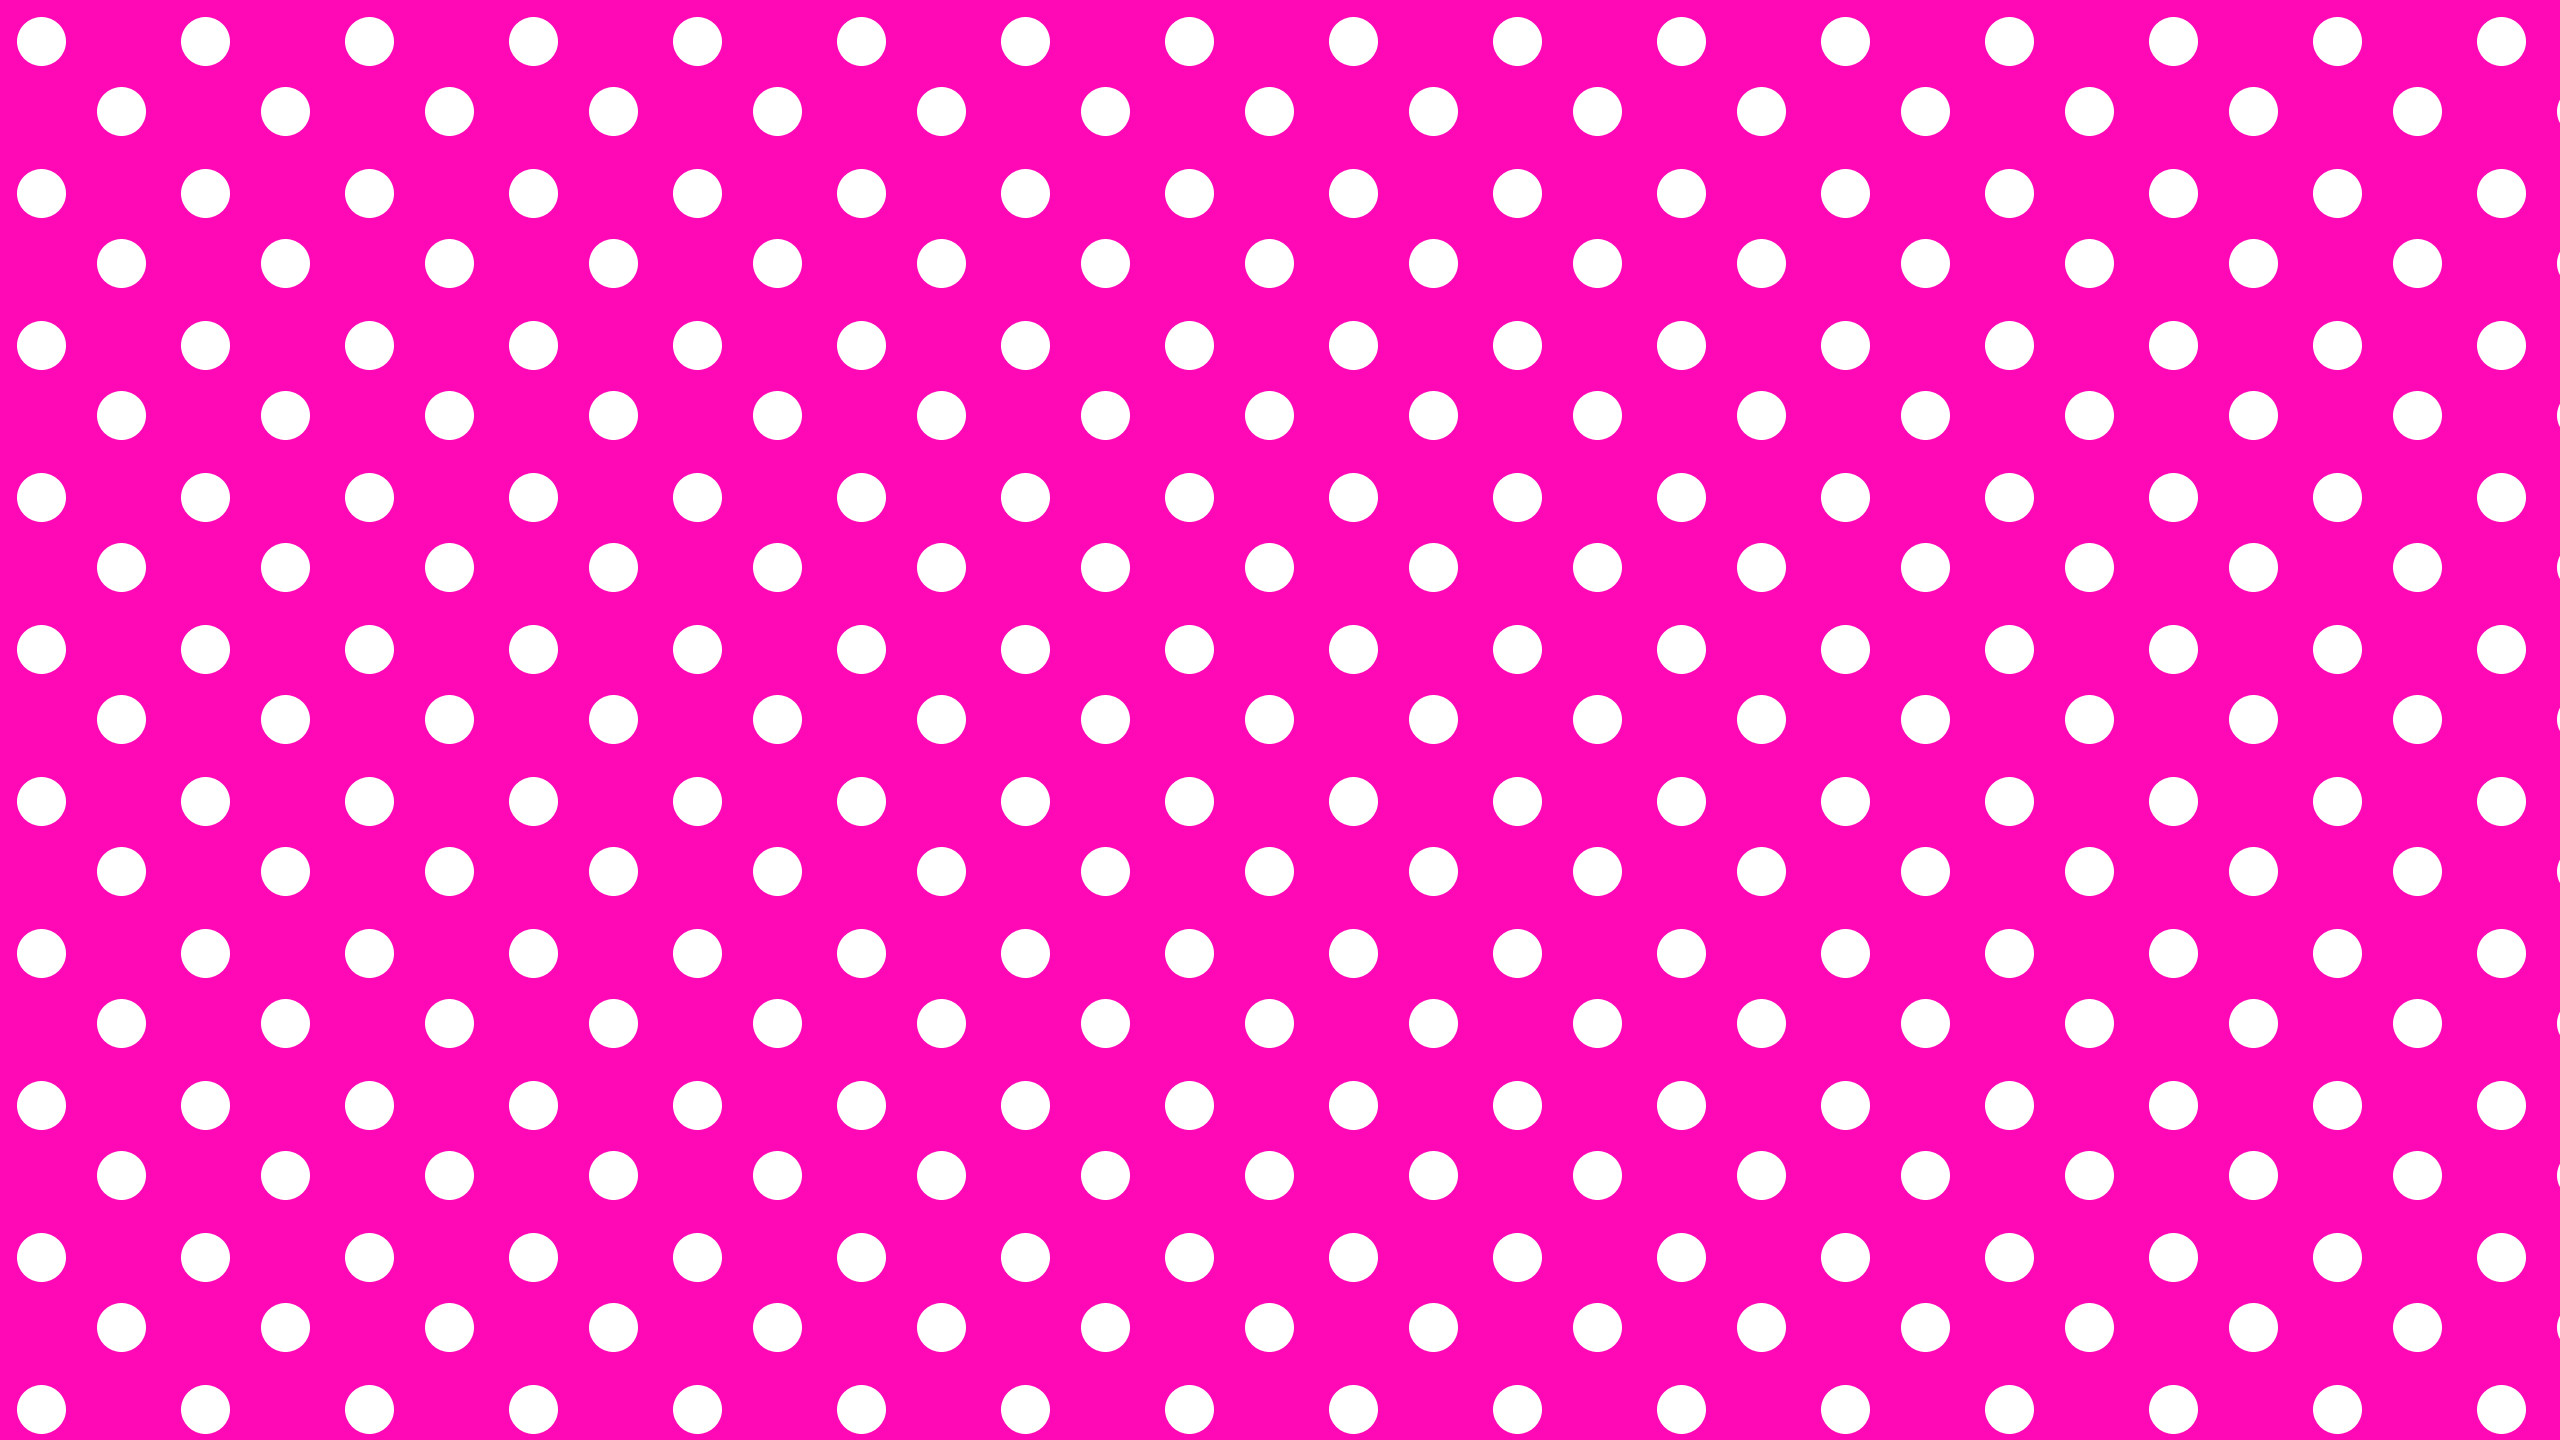 Pink Polka Dot Wallpaper Data-src - Background Minnie Mouse Polka Dots